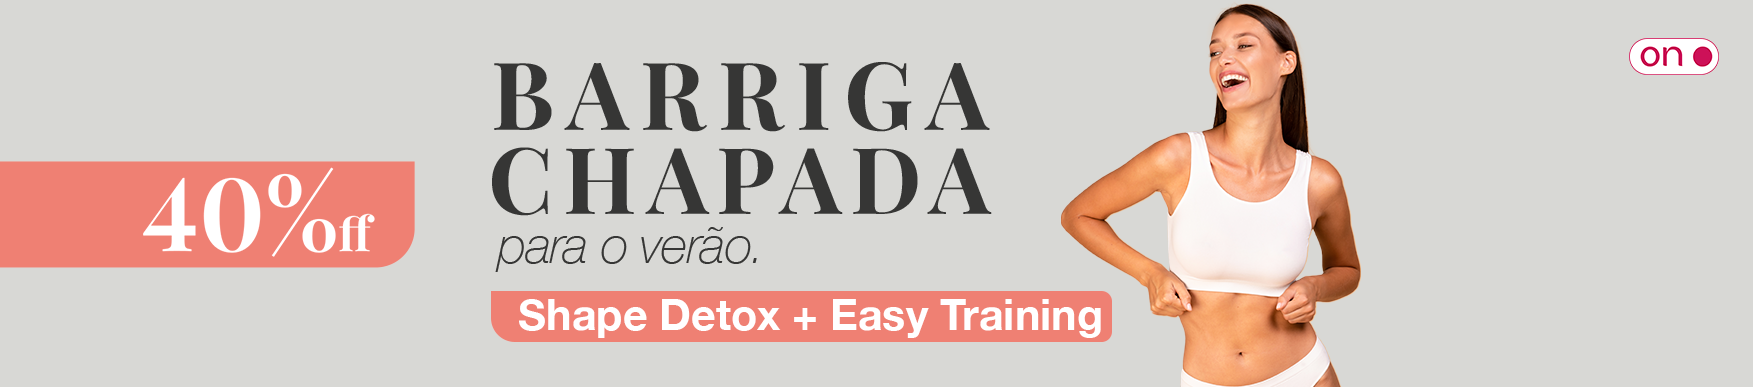 Barriga chapada Shape Detox + Easy Training 